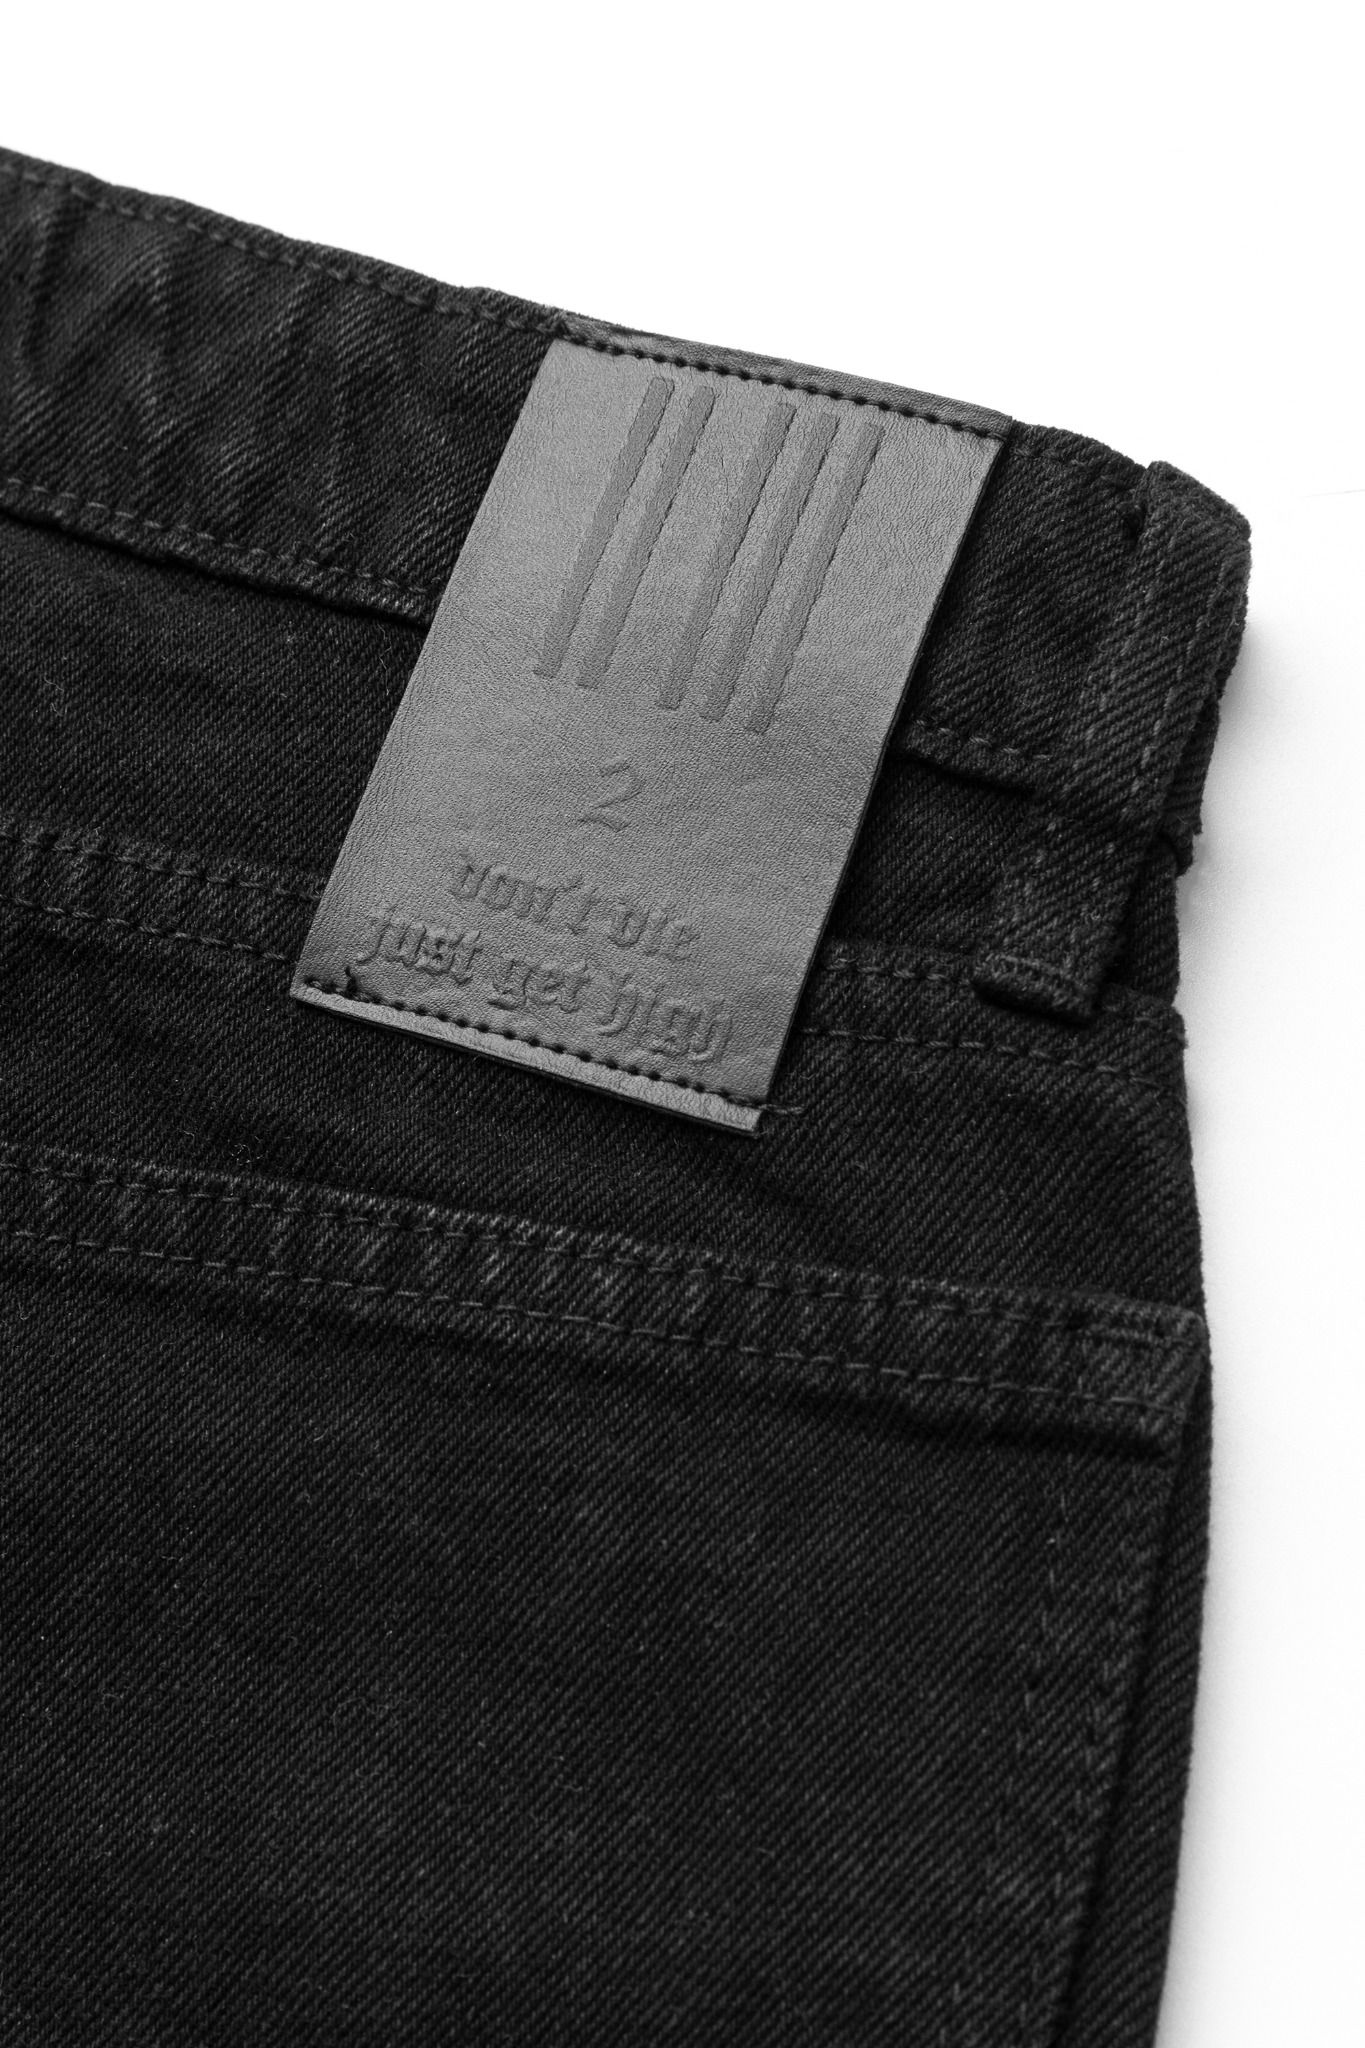  23'BC jeans / Black 